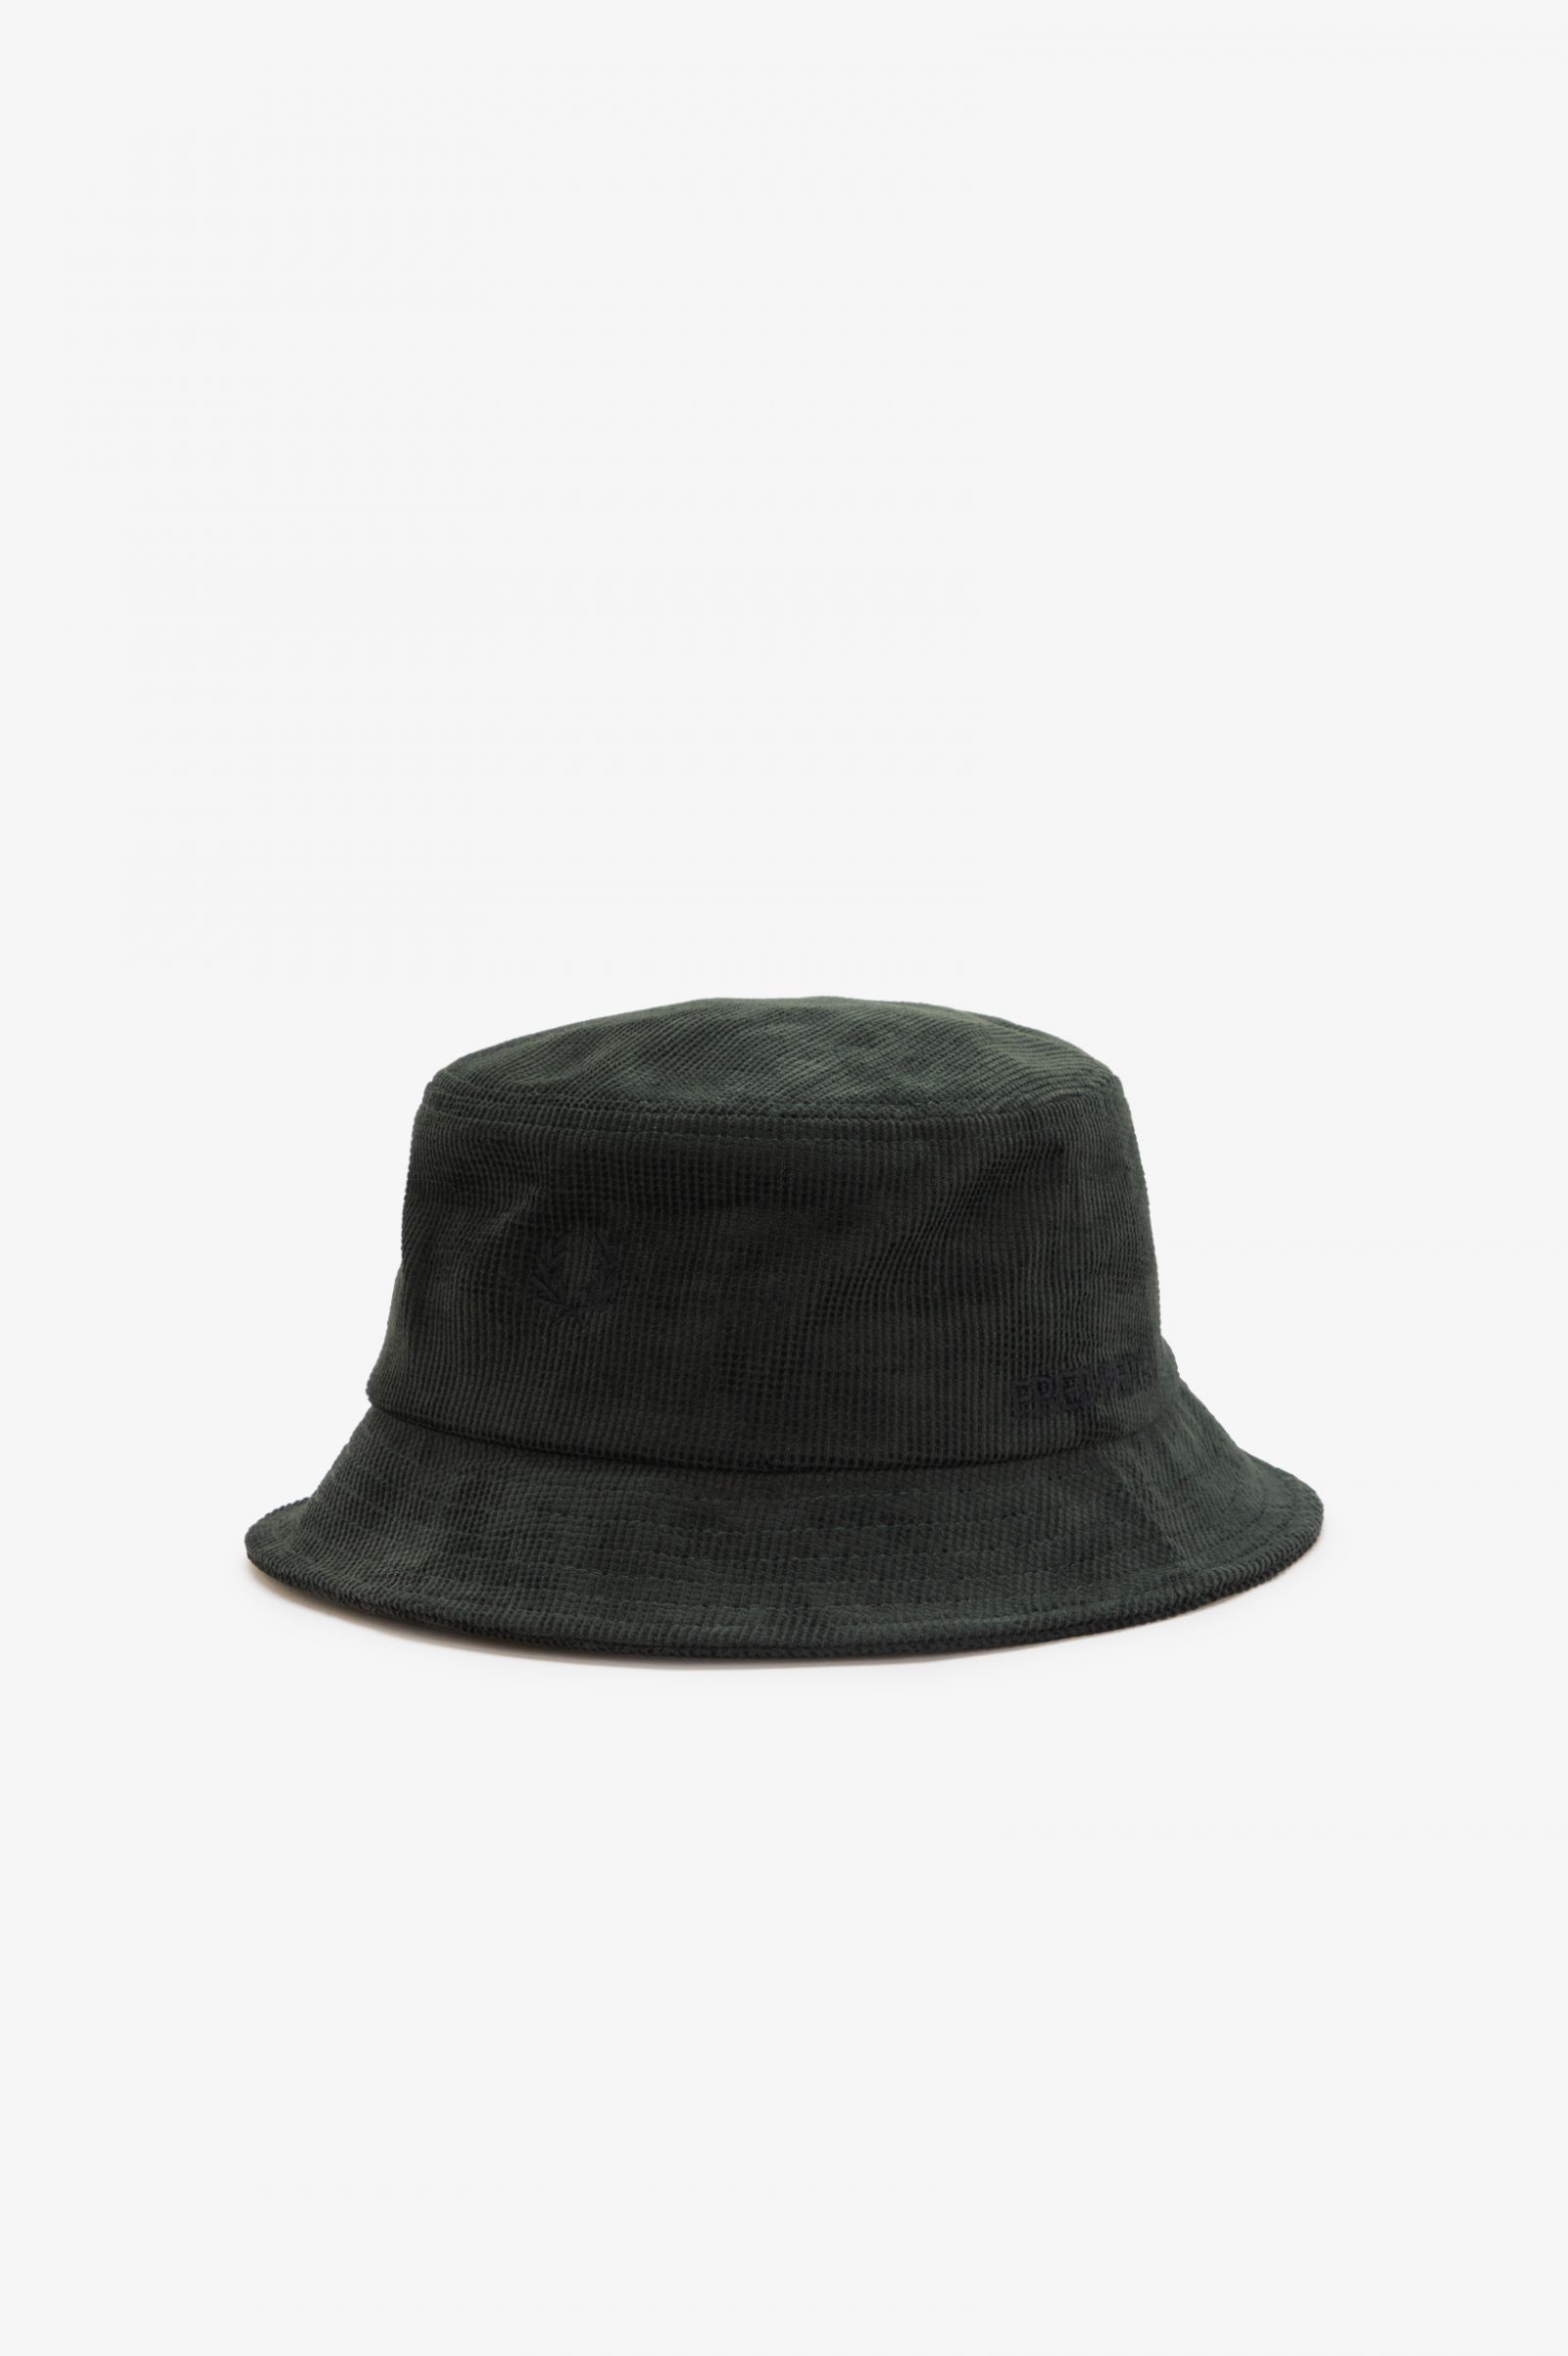 Waffle Cord Bucket Hat - Night Green / Black | Accessories | Hats ...